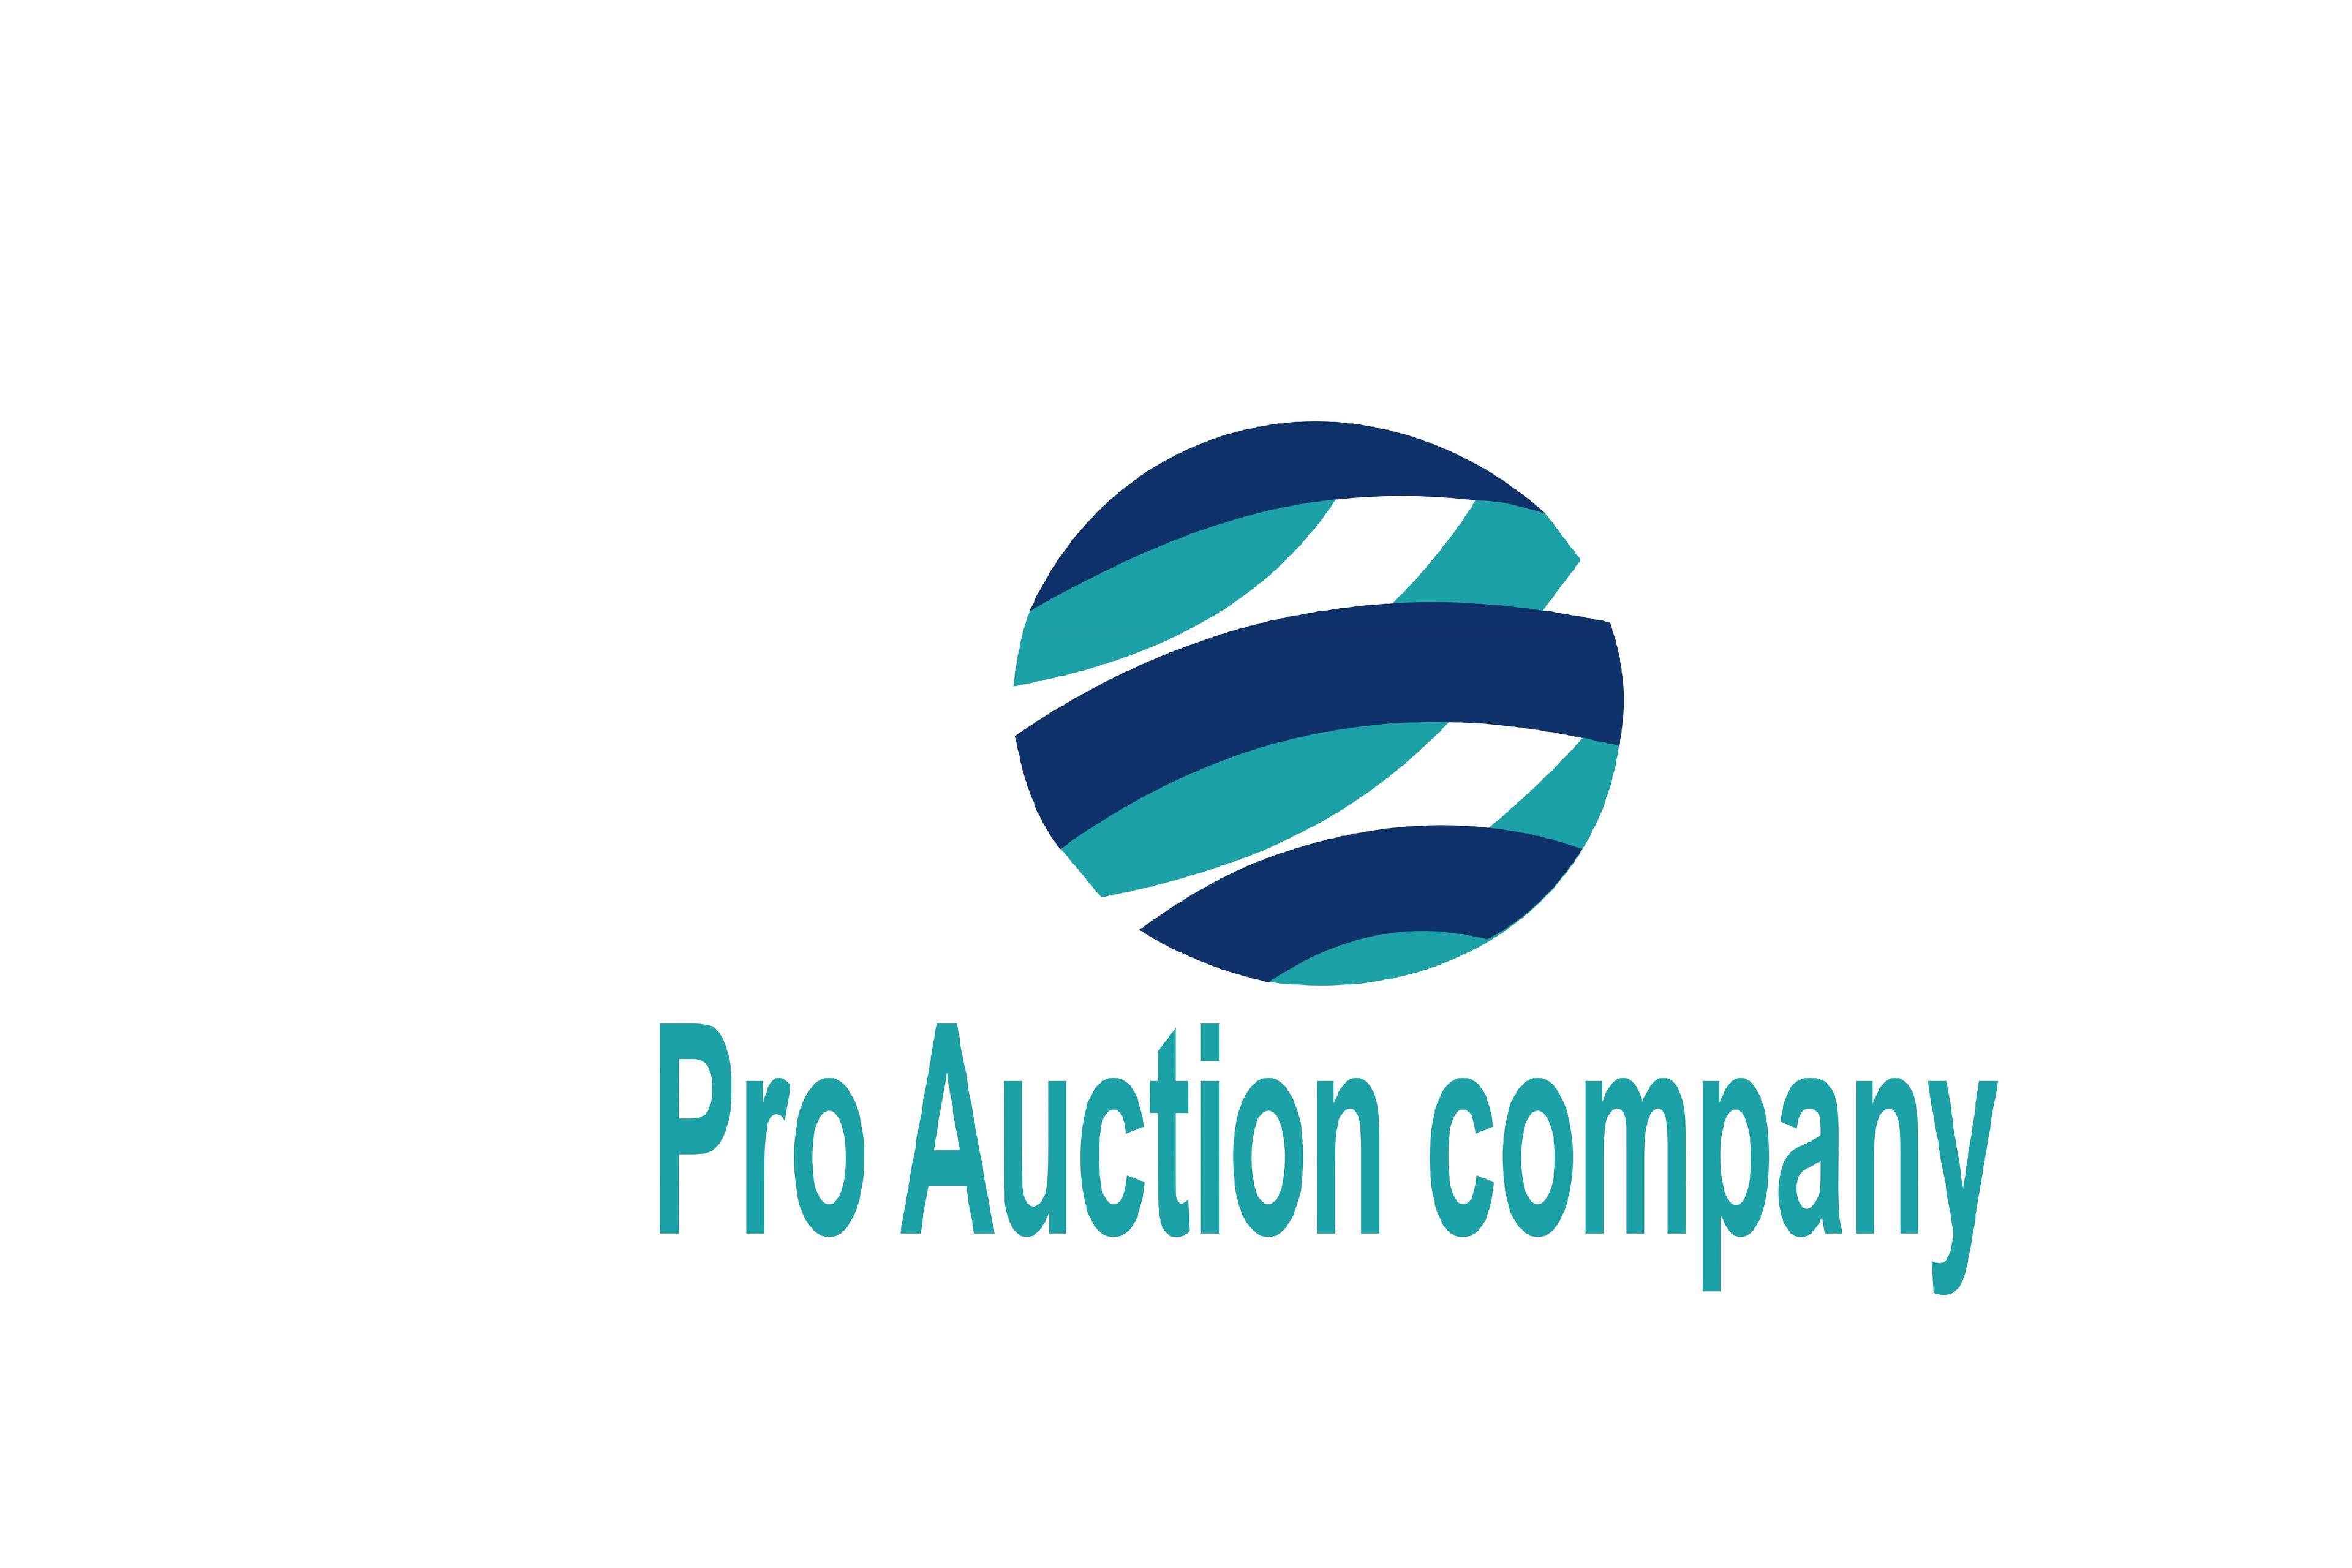 Pro Auction Company